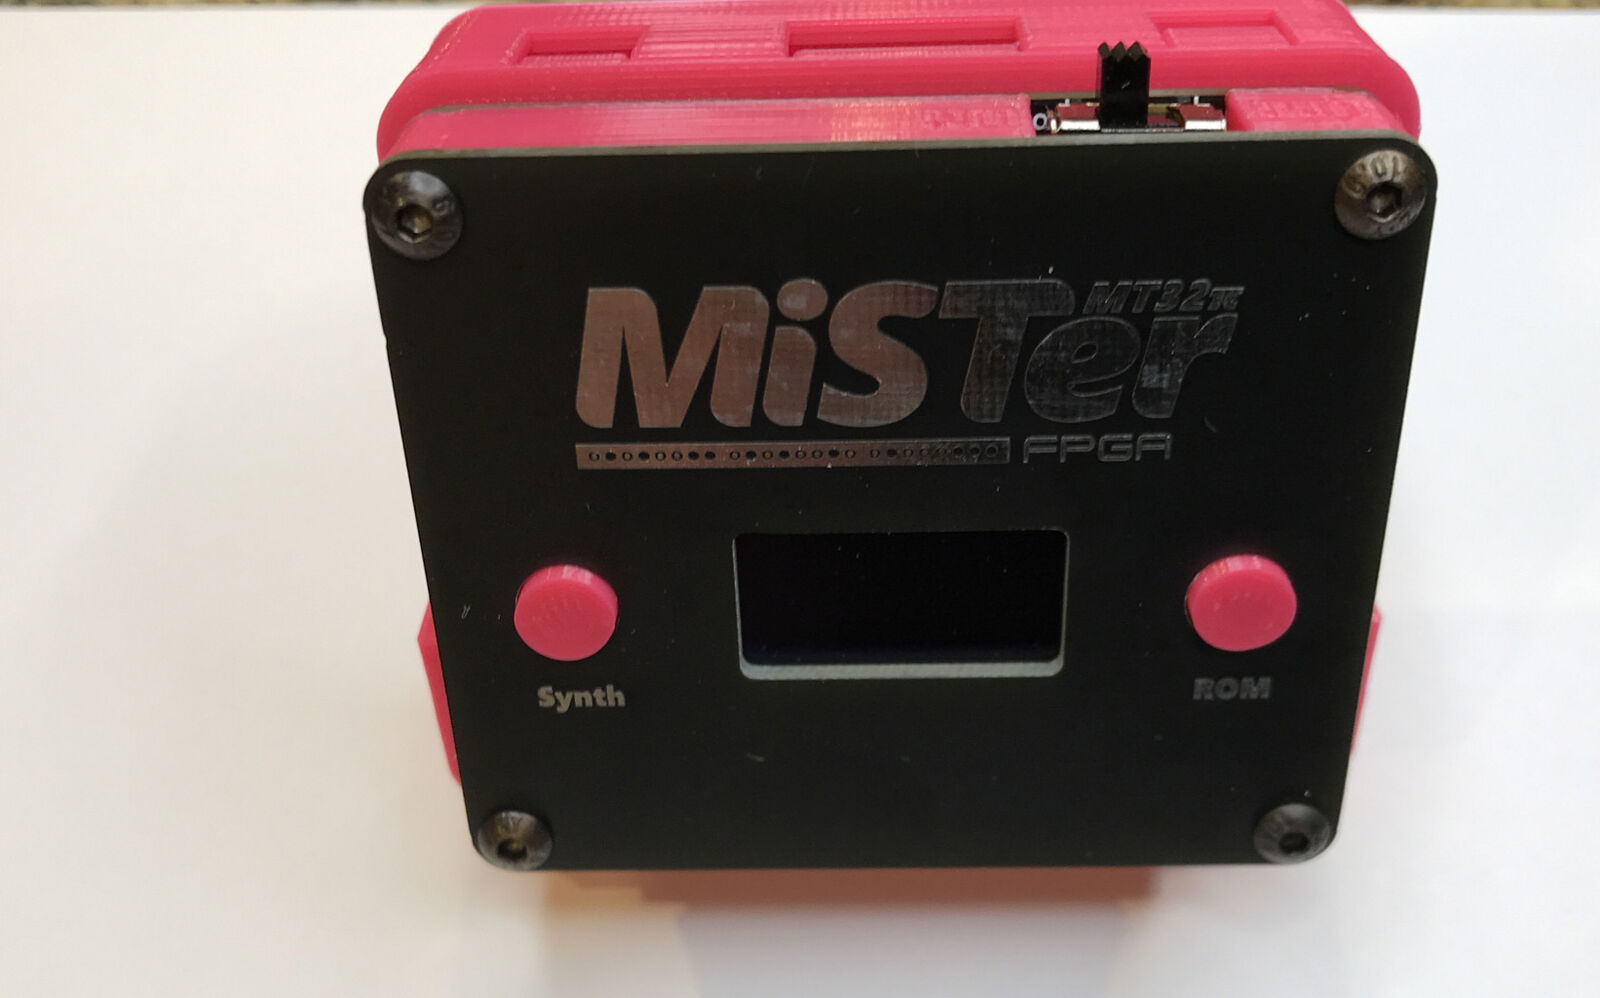 Mister FPGA MT-32 PI Package 2 Limited Pink Edition